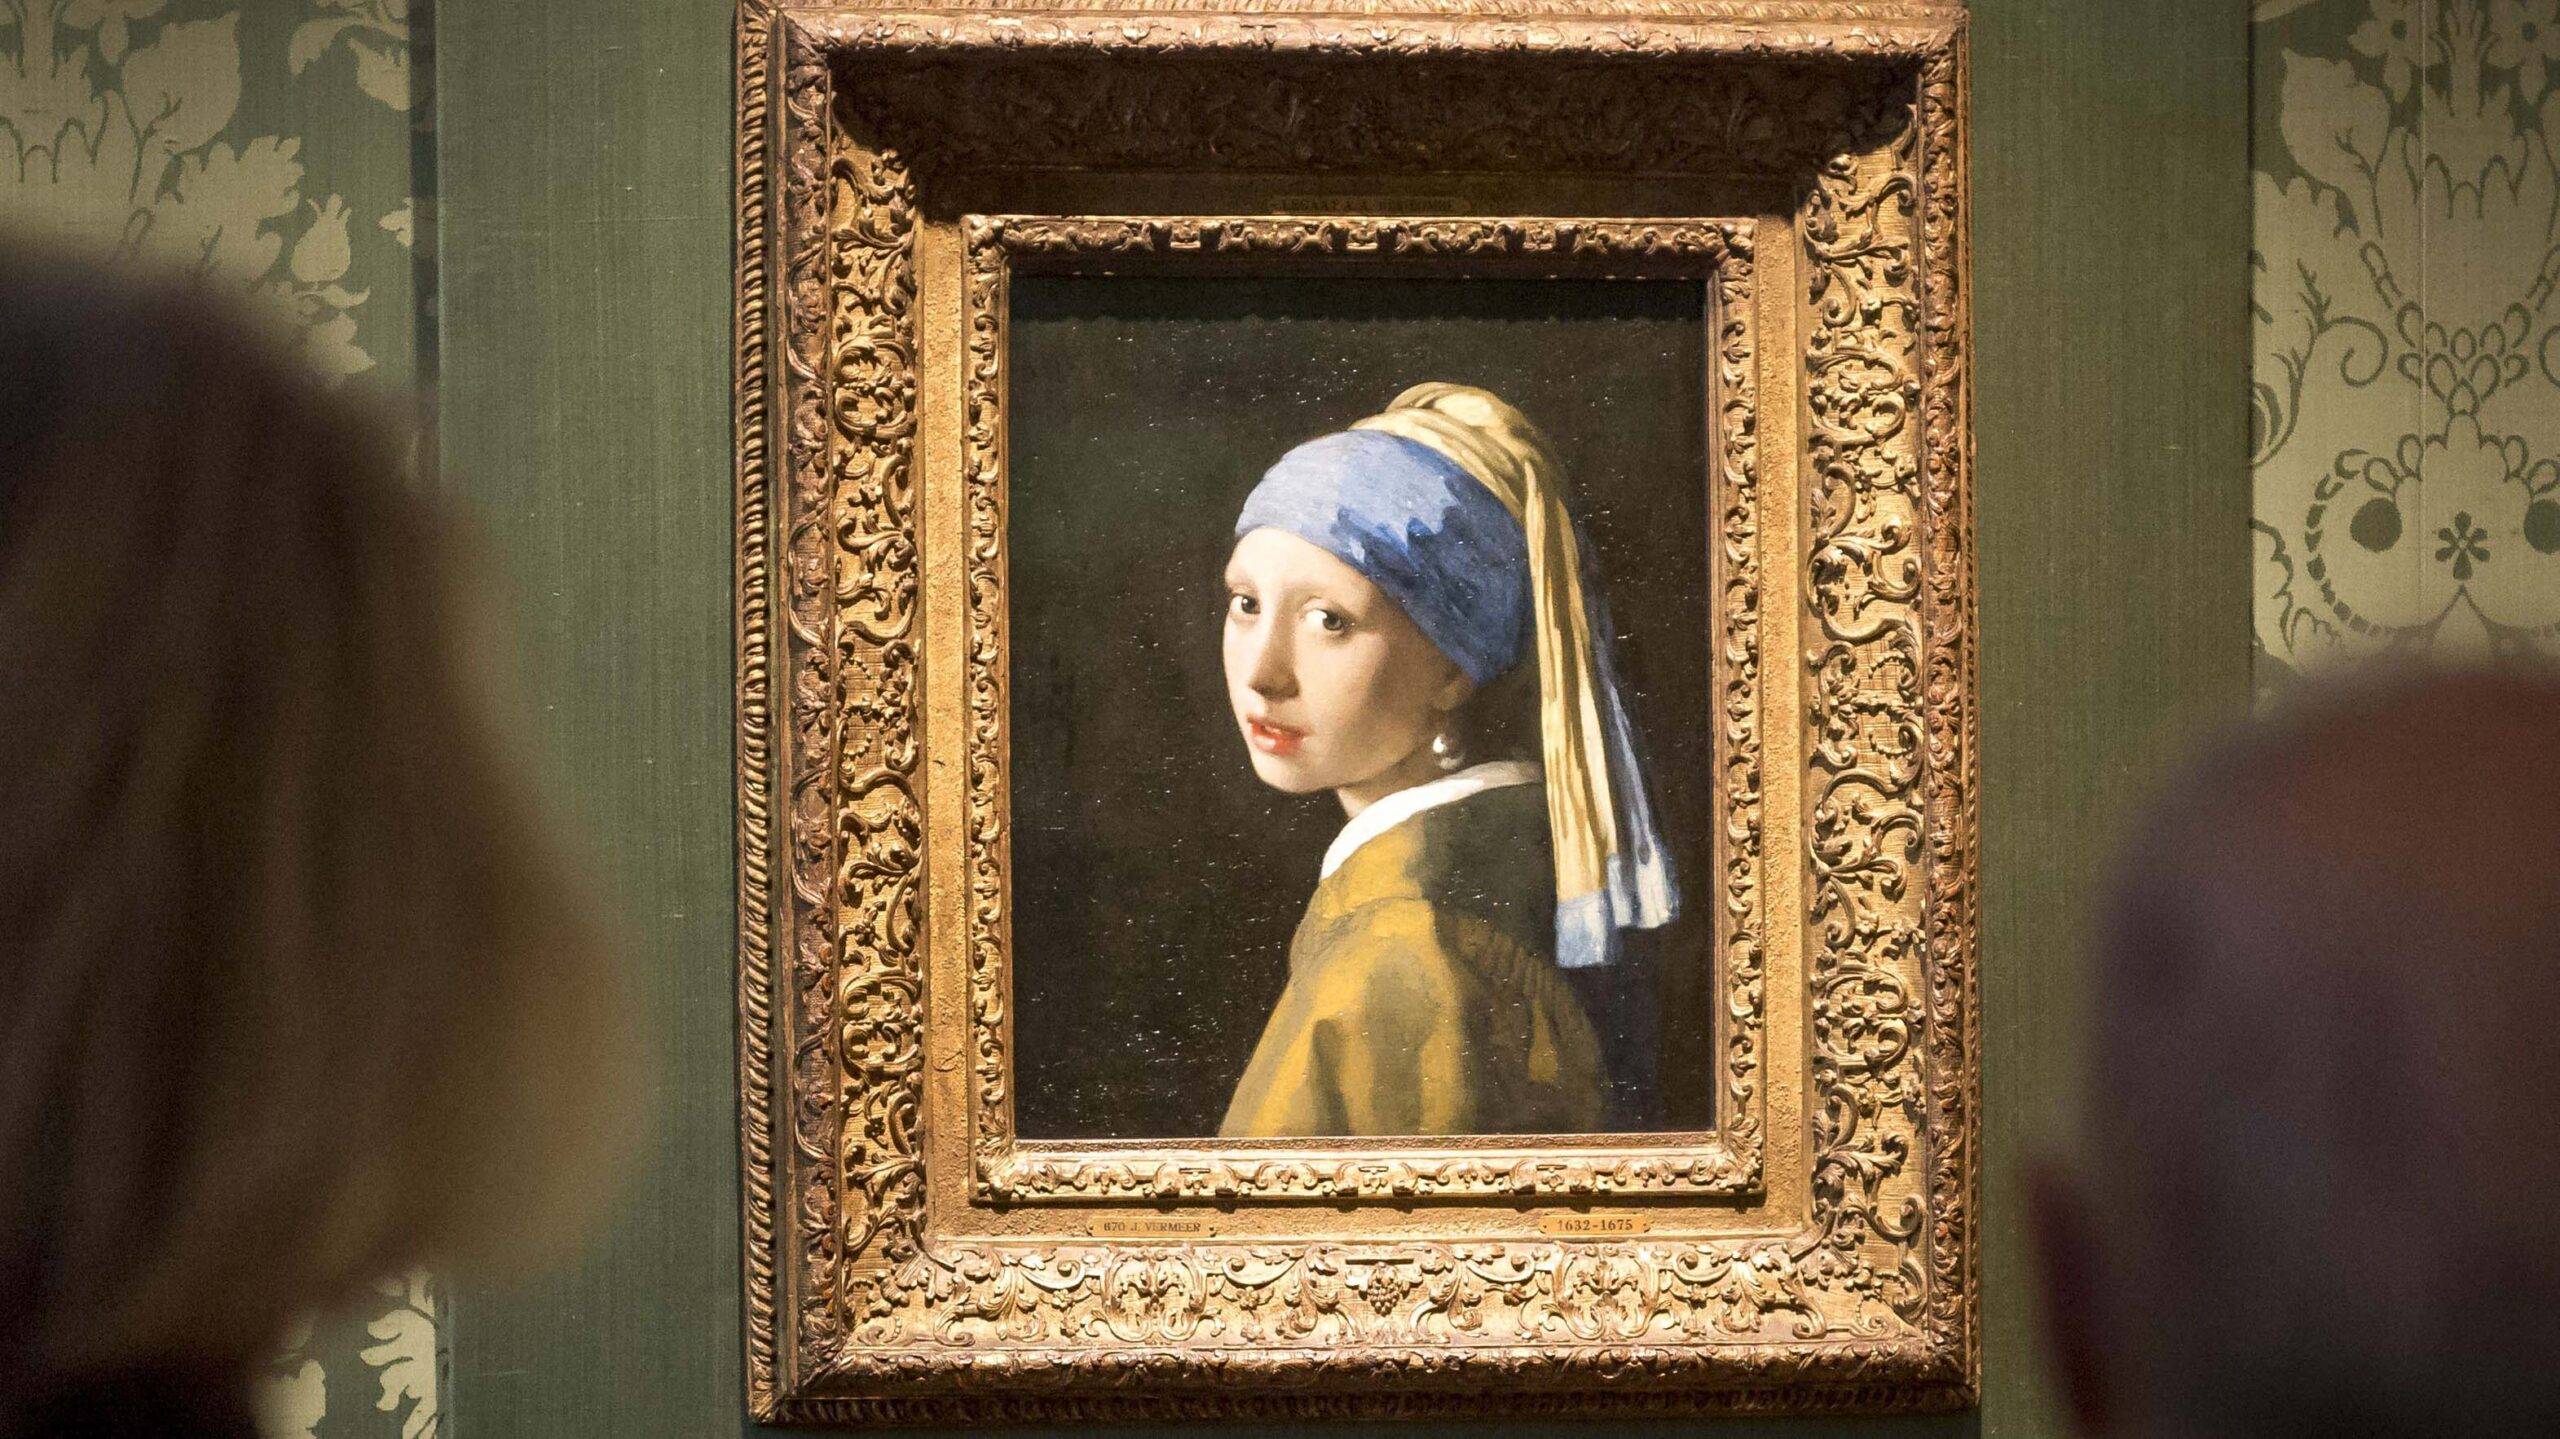 Condenan a dos meses de prisión a los activistas que atacaron un cuadro de Vermeer con sopa de tomate